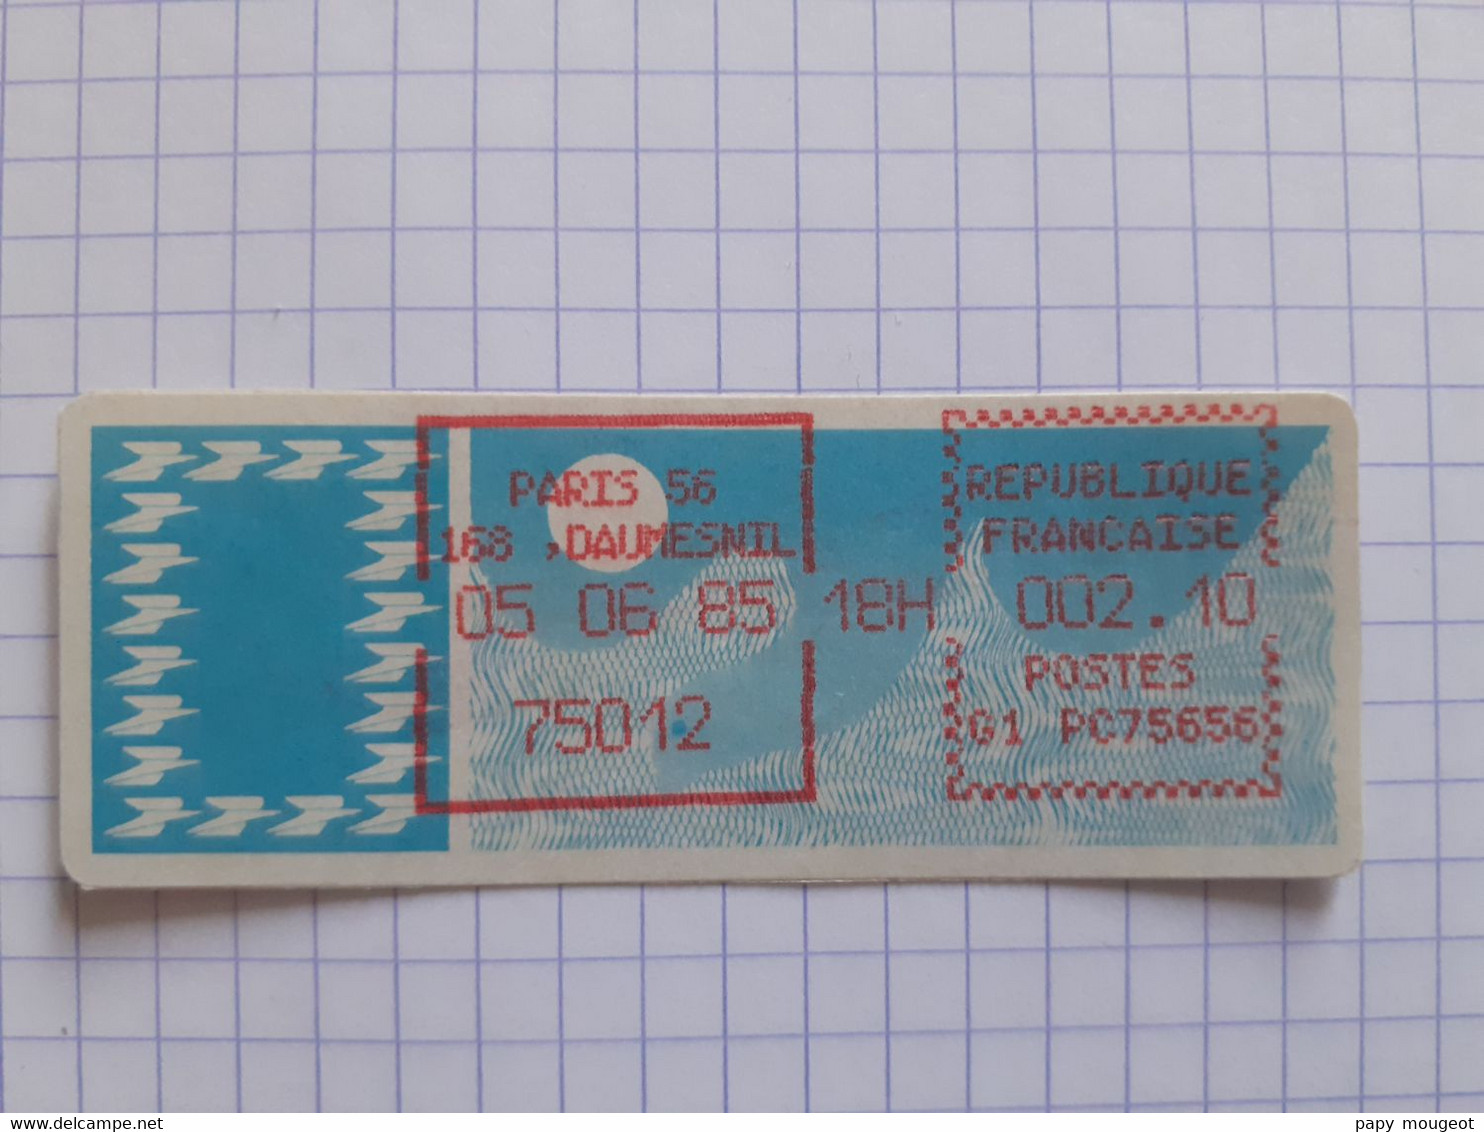 Paris 56 168, Daumesnil 75012 - 05-06-85 - G1 PC75656 Tarif 2.10 - 1985 Papier « Carrier »